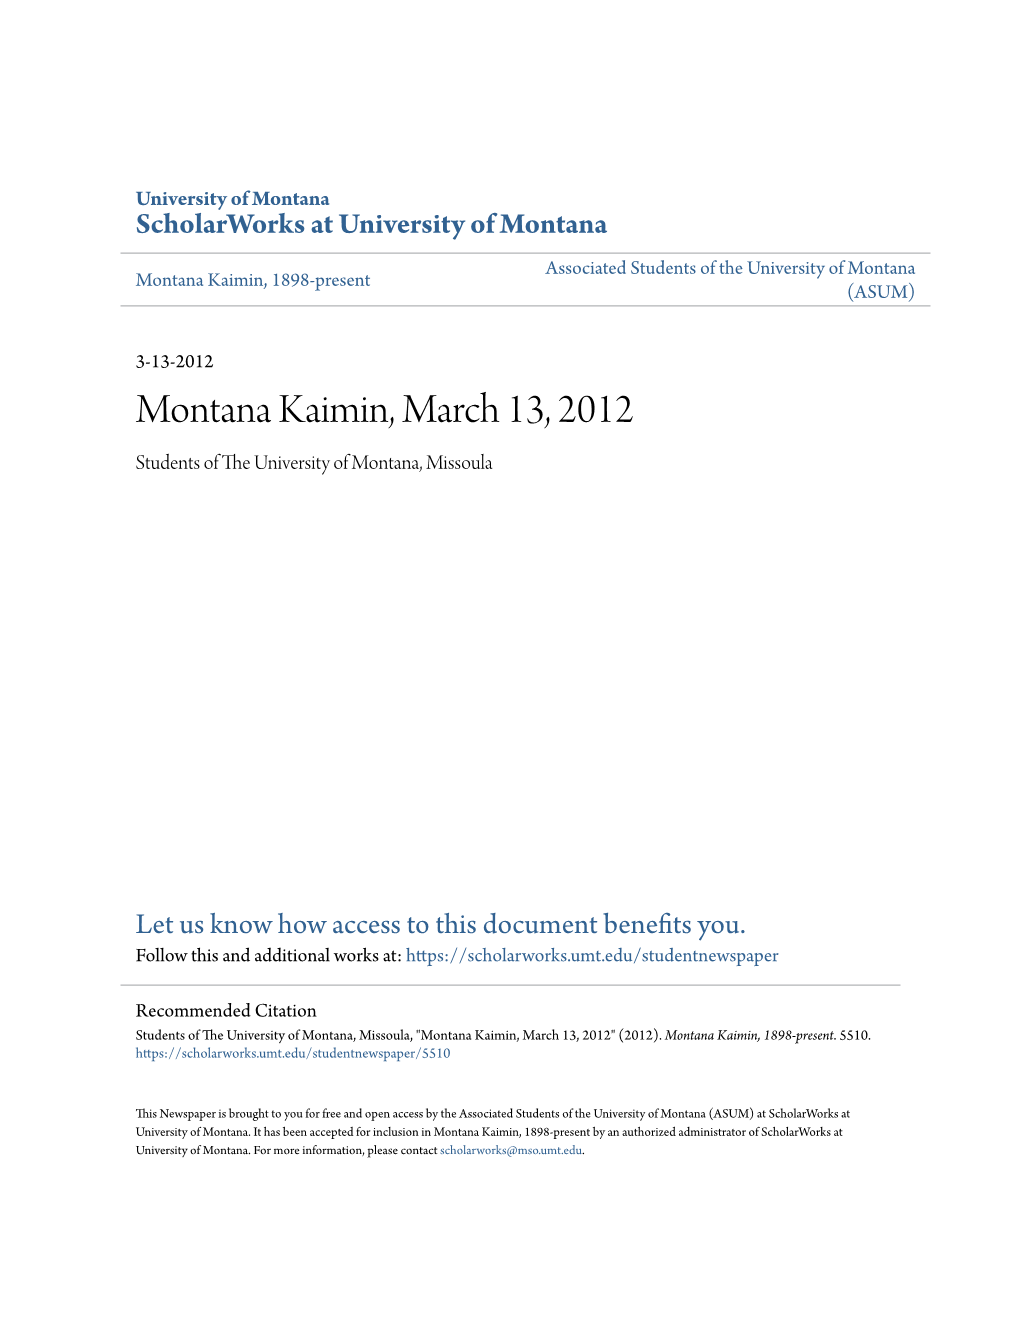 Montana Kaimin, March 13, 2012 Students of the Niu Versity of Montana, Missoula